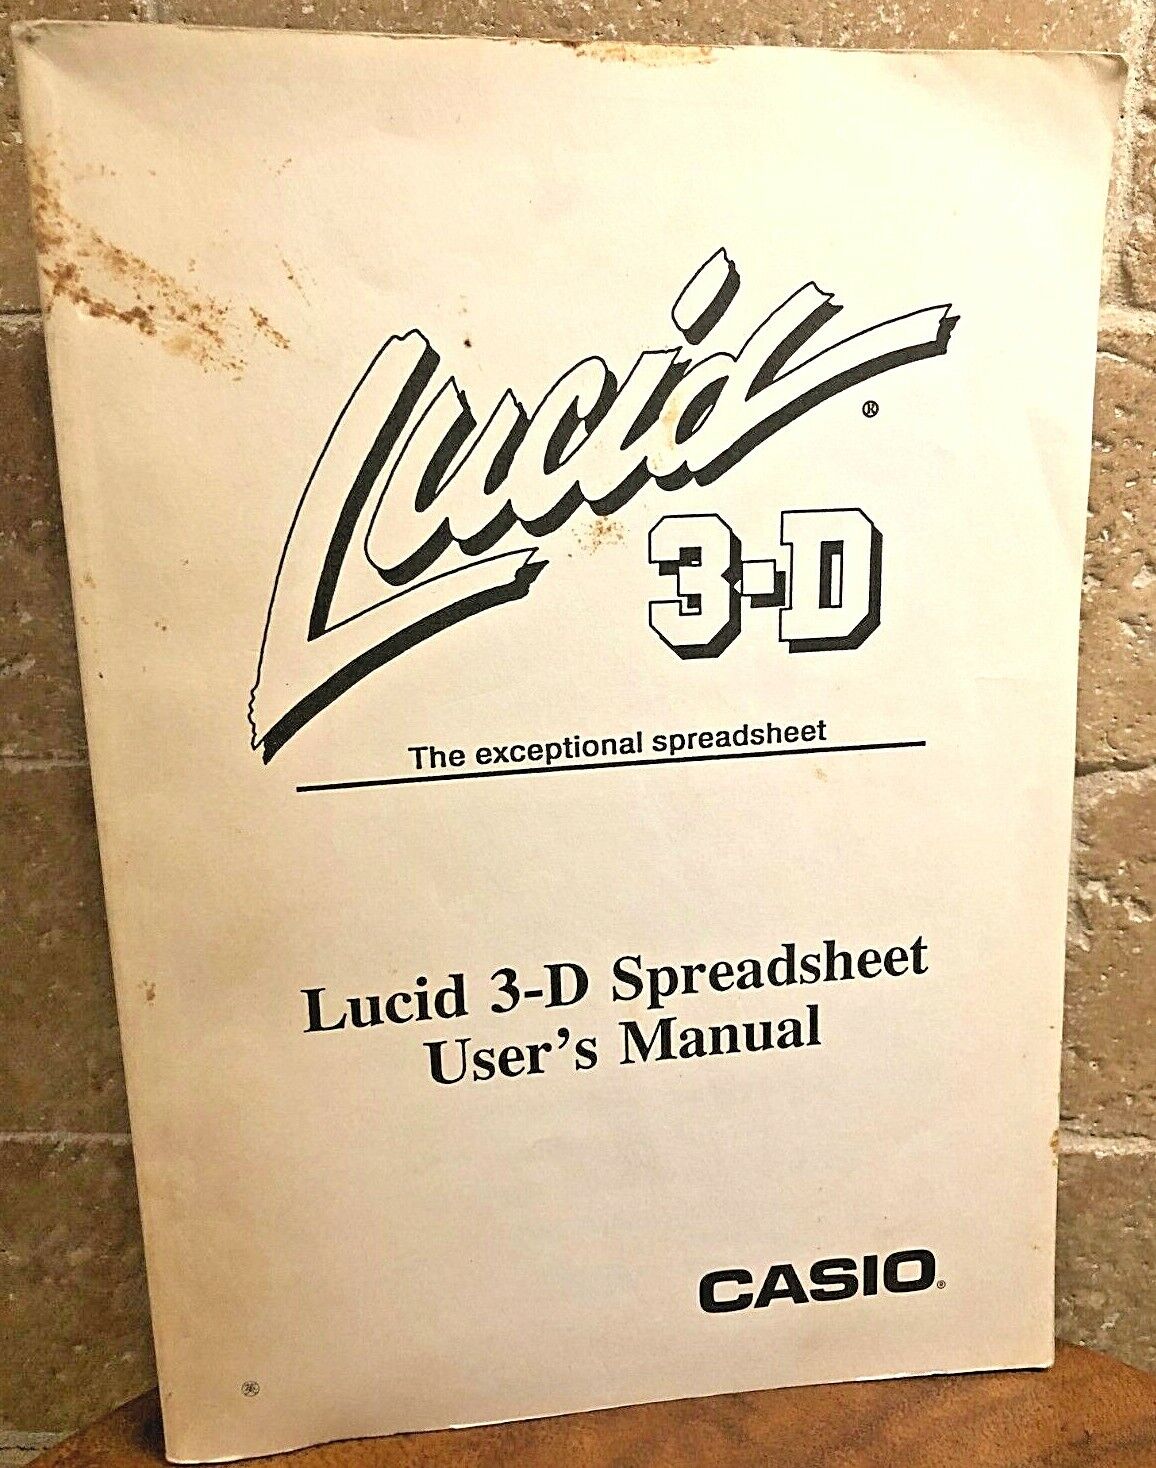 Retro Casio Software - Lucid 3-D Spreadsheet, User’s Manual, 1992 Operator Guide